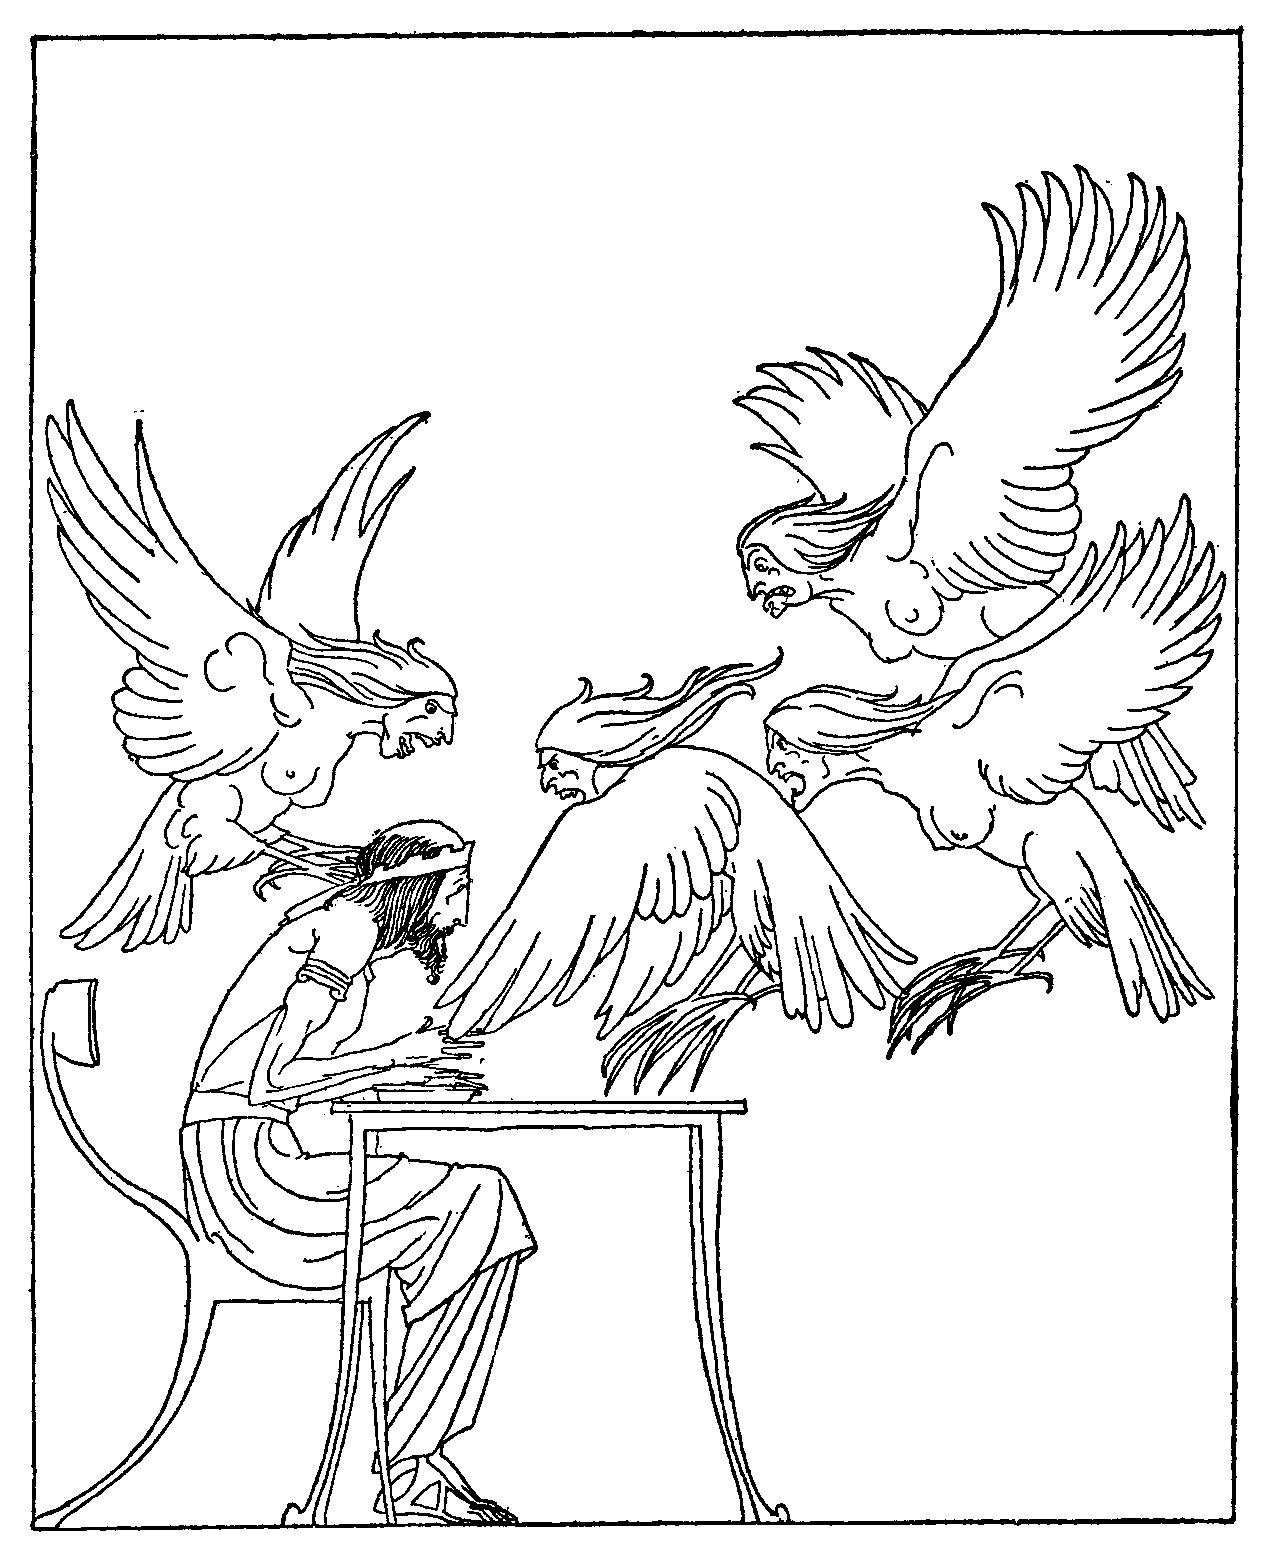 [Illustration] from Golden Fleece by Padraic Colum